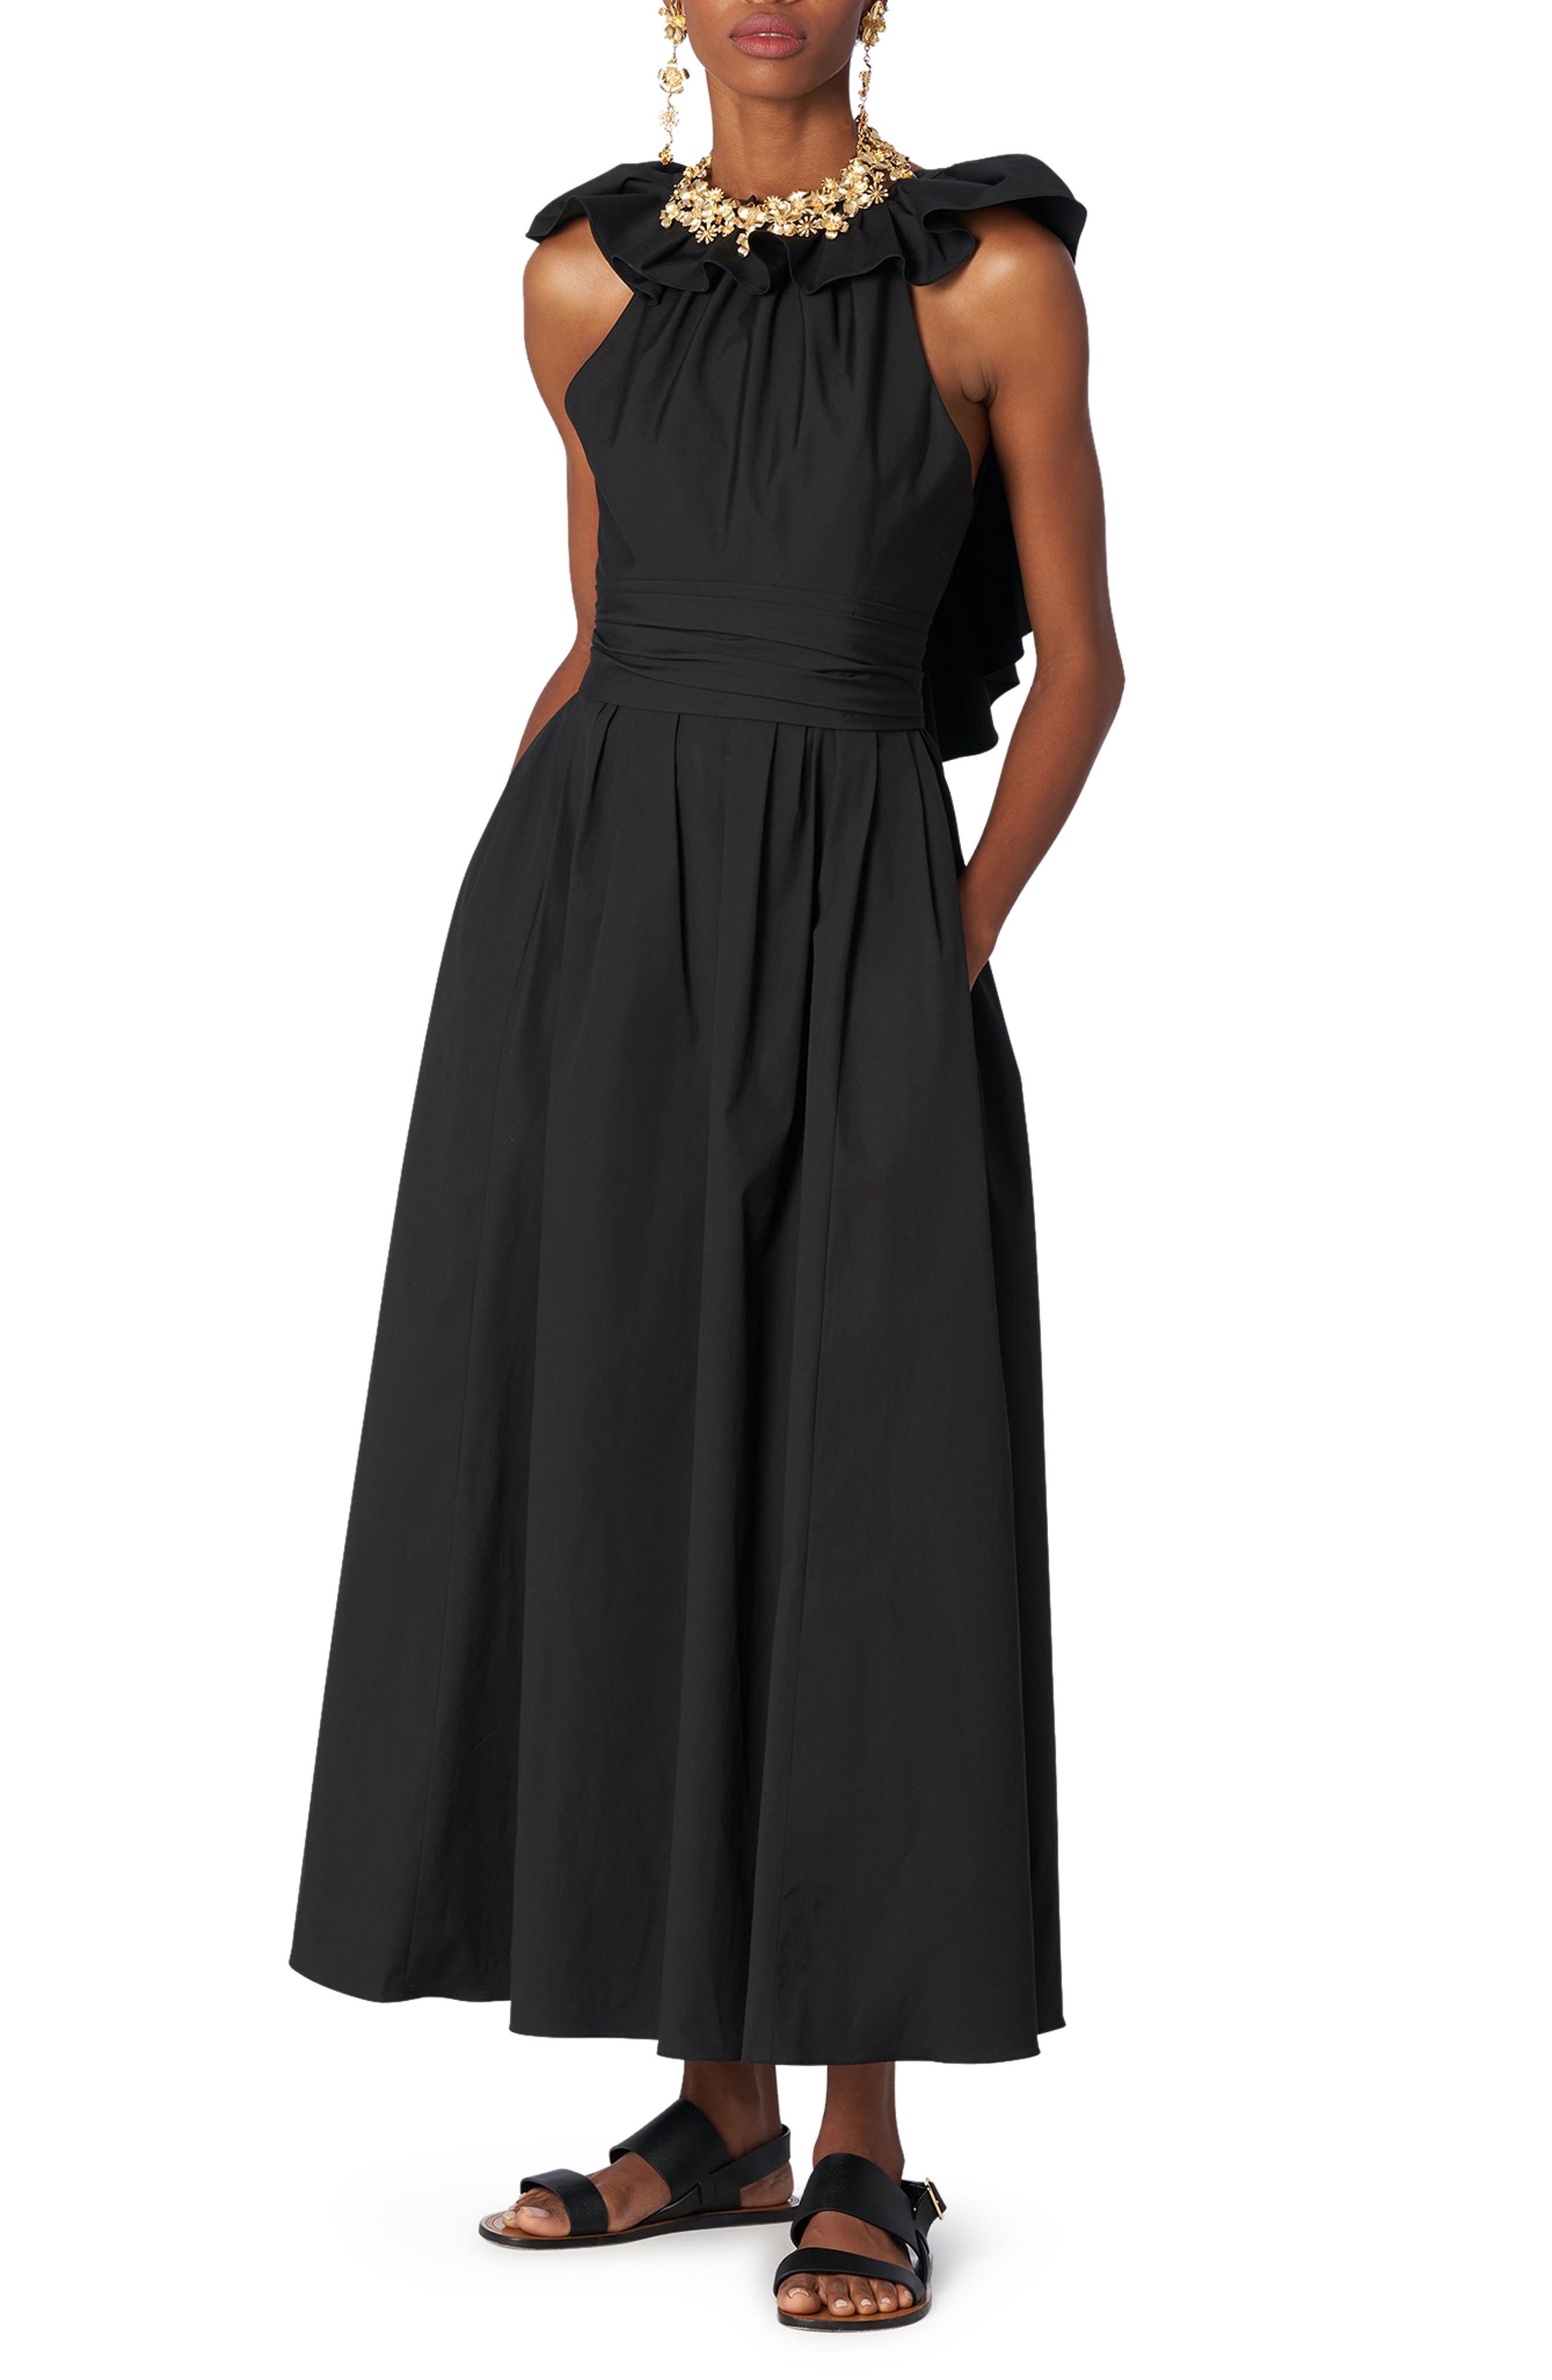 Carolina Herrera Ruffle Neck Dress in Black at Nordstrom, Size 8